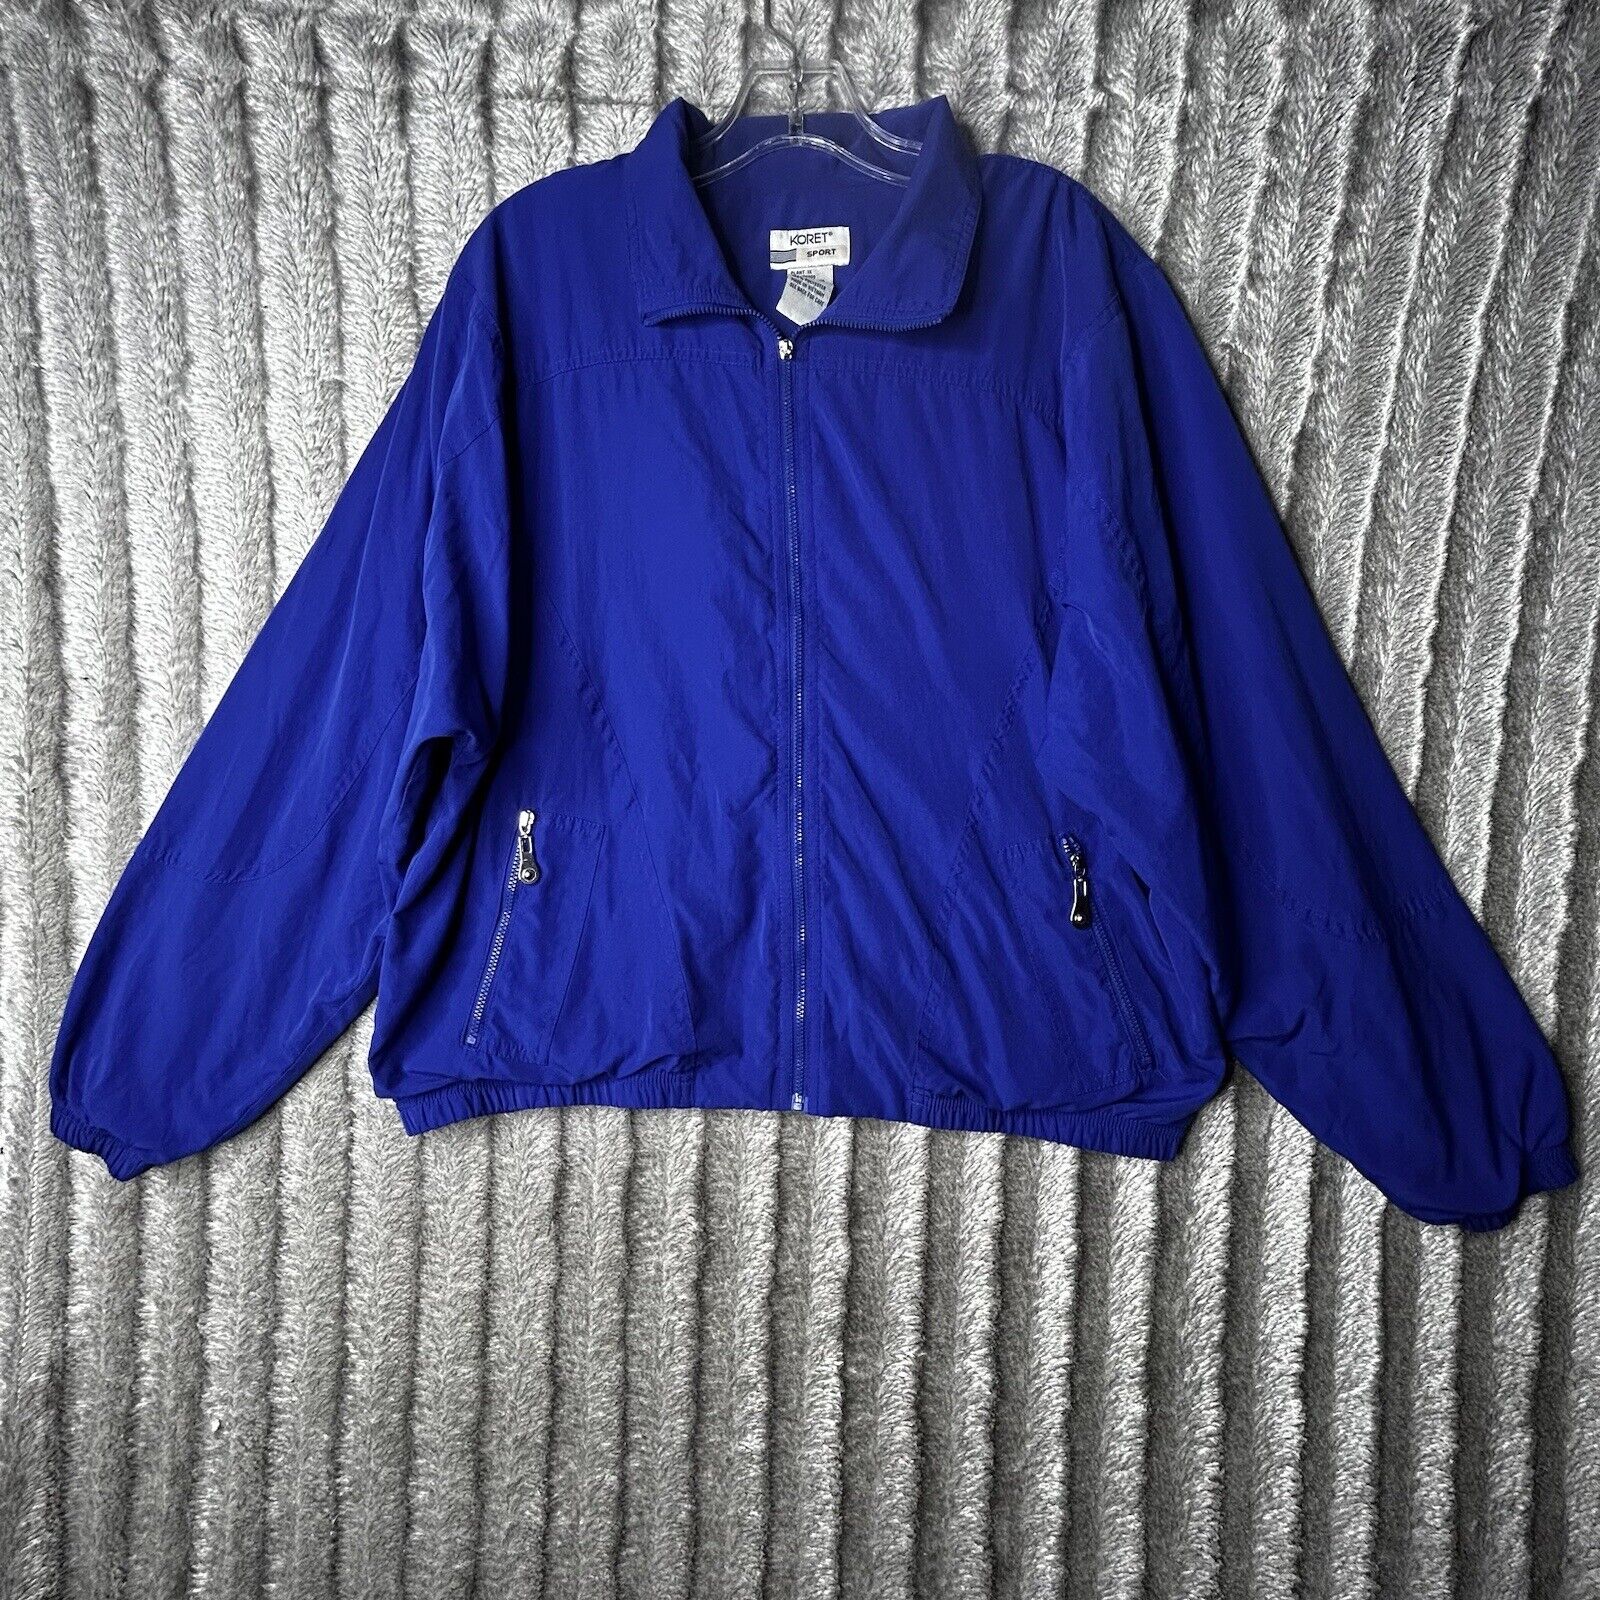 Koret Sport women’s full zip jacket size L blue - image 1